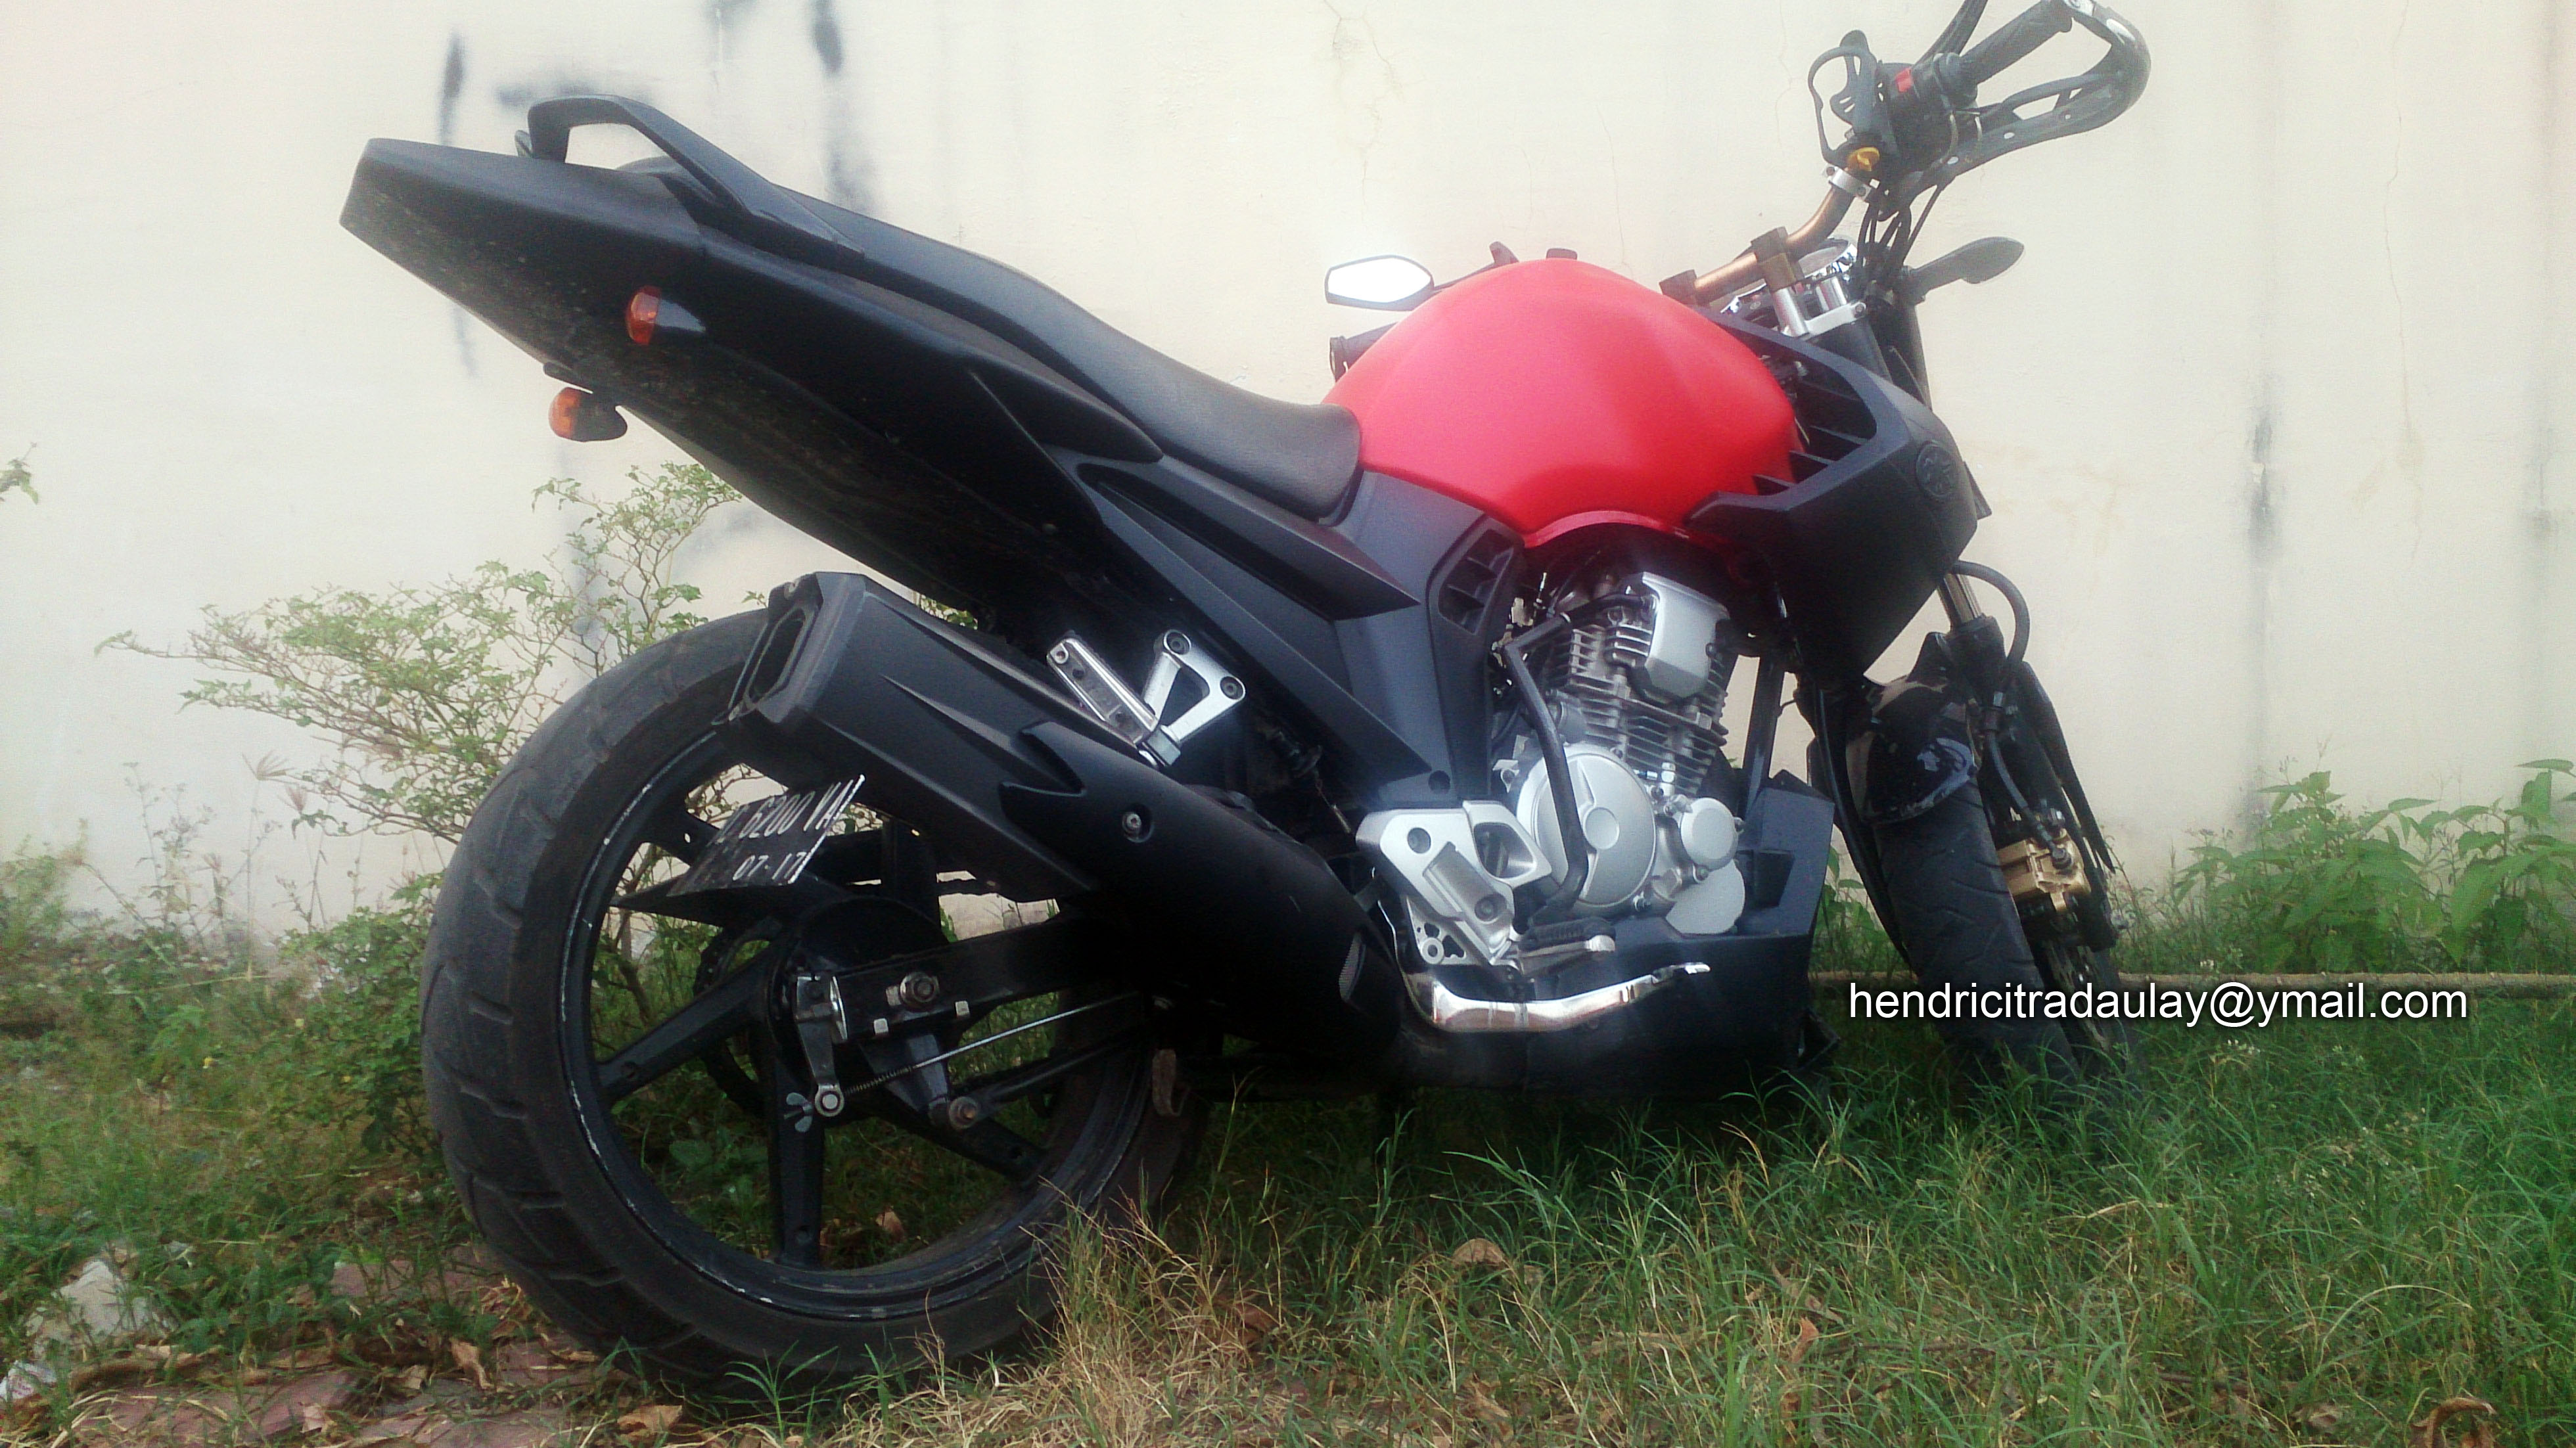 Modifikasi Motor Yamaha Scorpio Hendri Citra Daulay